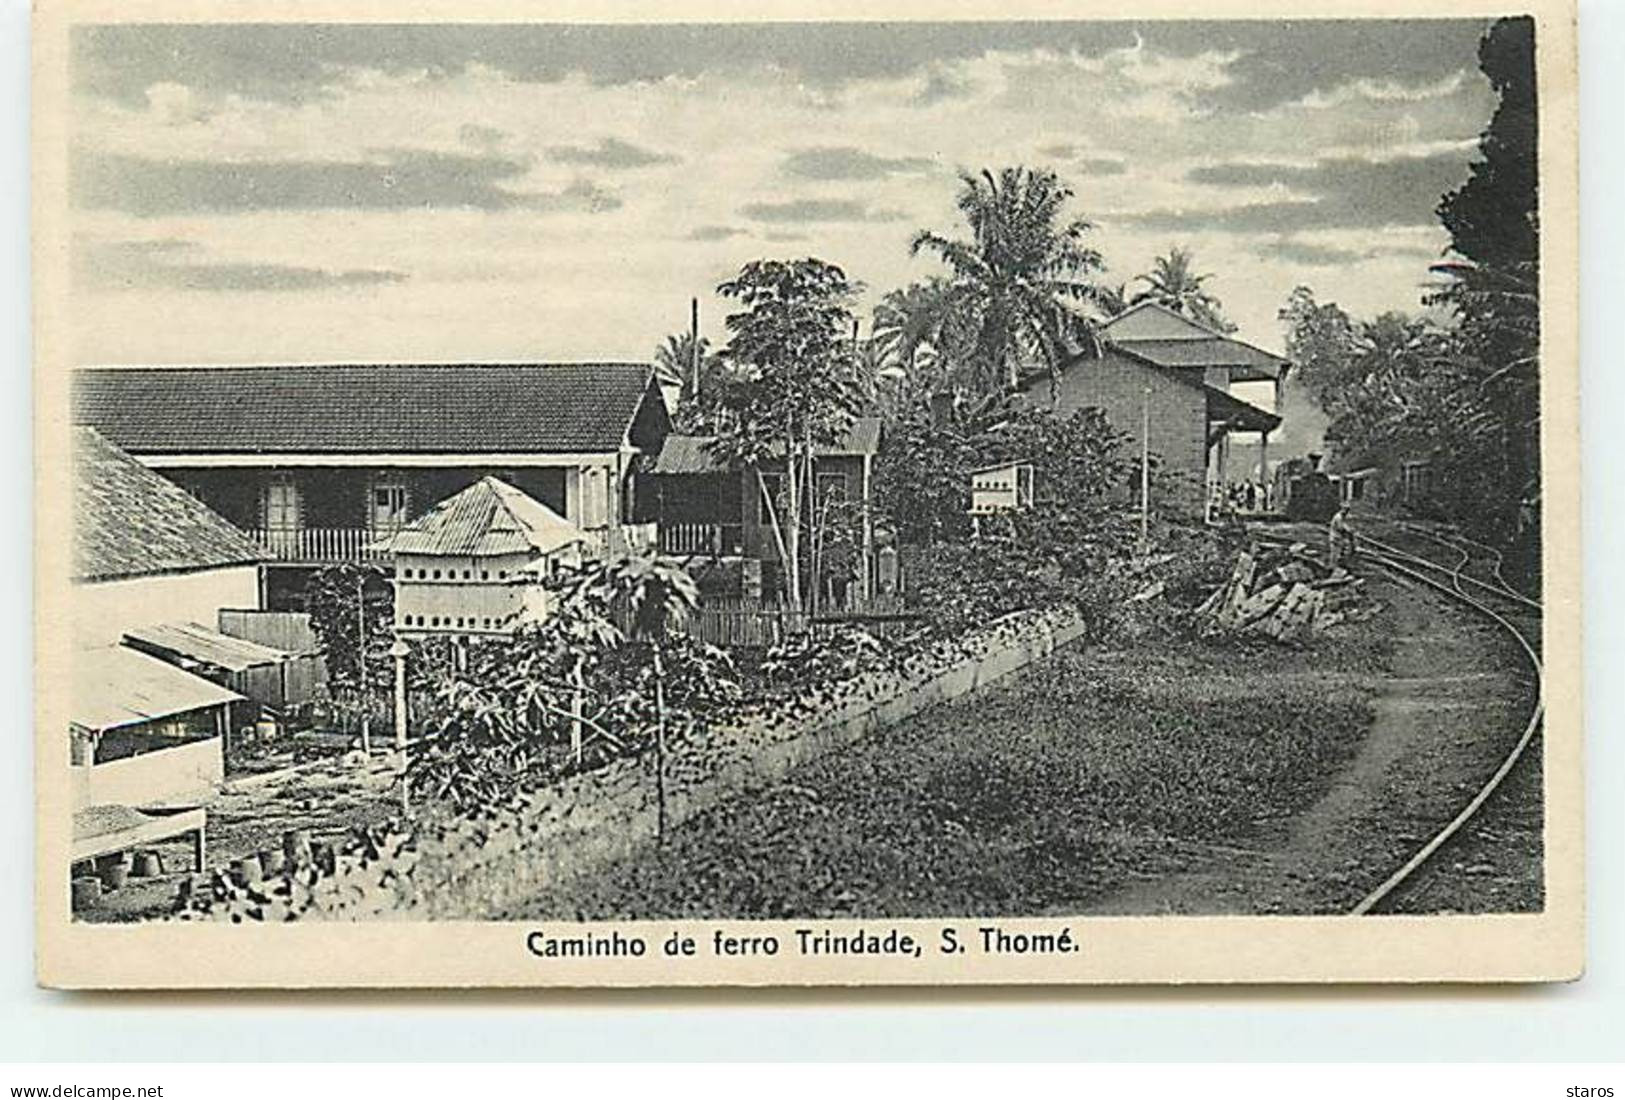 Sao Tome - S. THOME - Caminho De Ferro Trindabe - Bahnhof - Train - Sao Tome And Principe